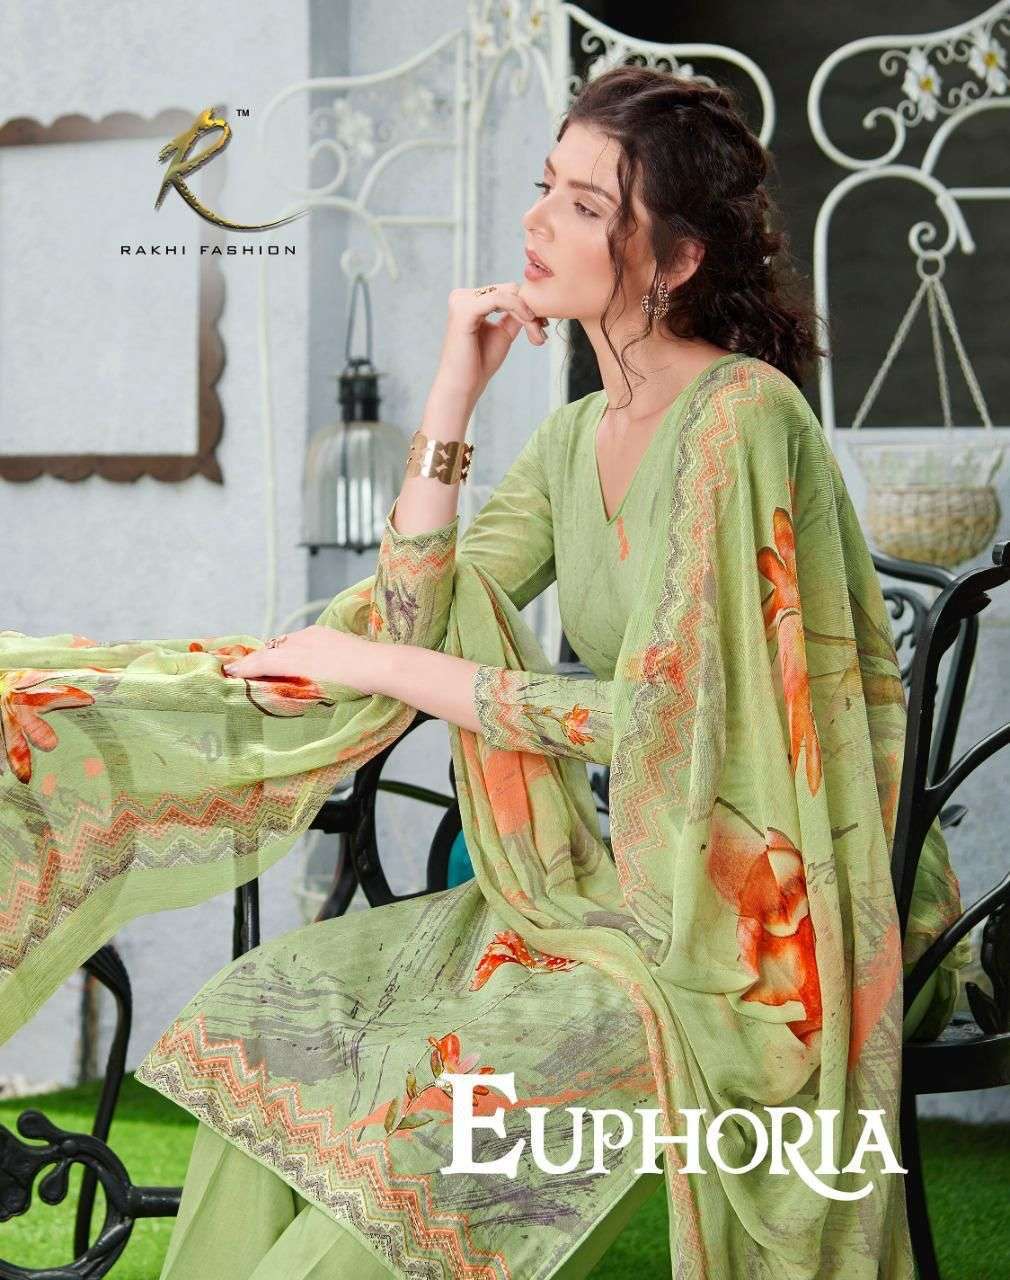 Rakhi Fashion Euphoria Glace Cotton Printed dress material a...